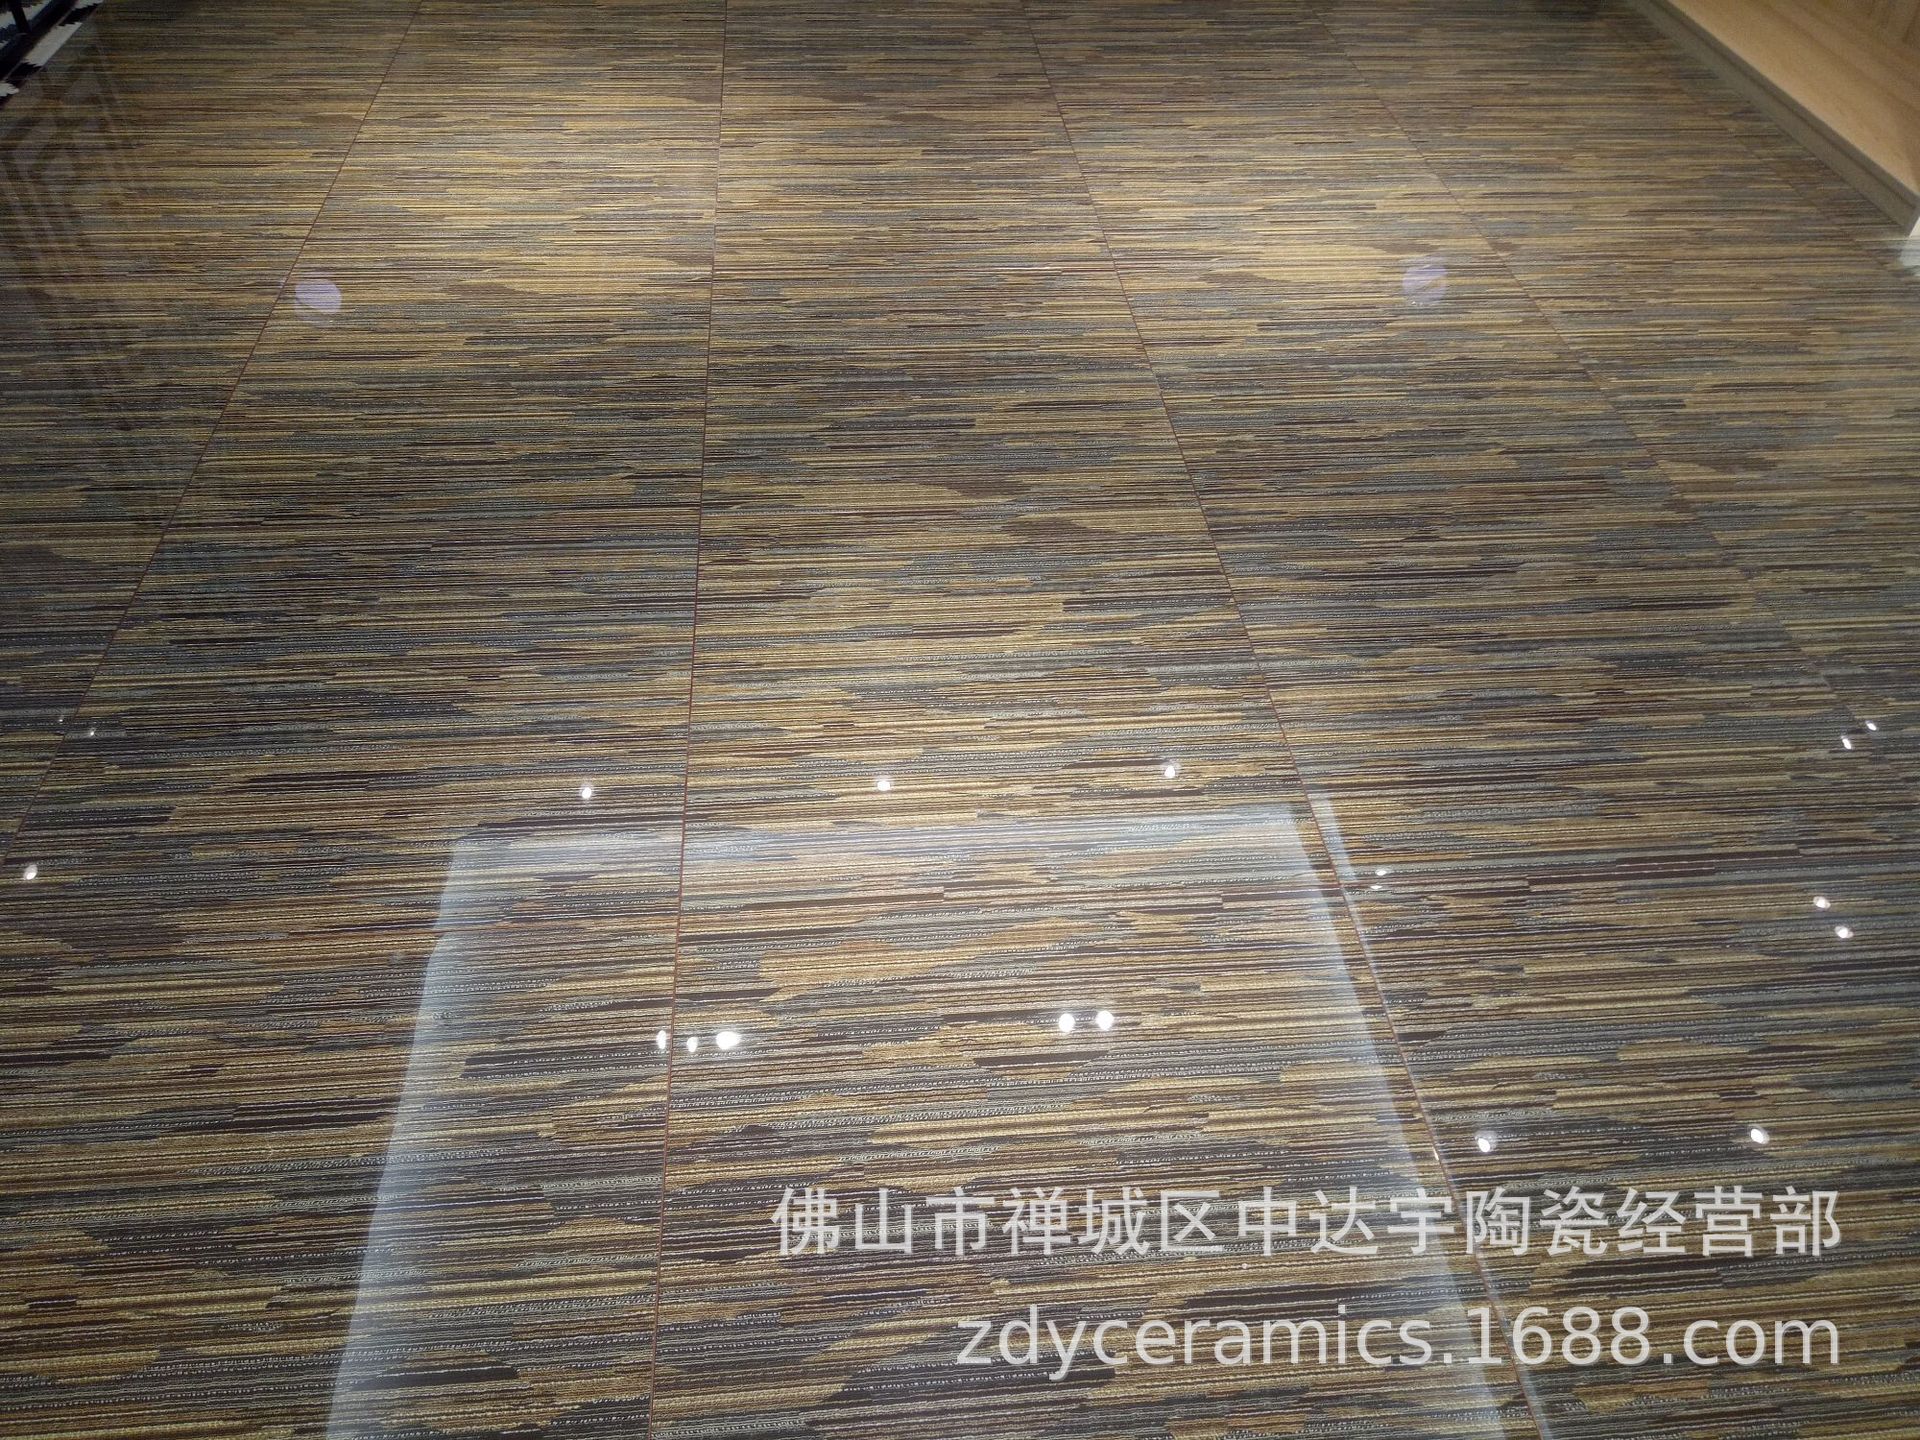 6073Q琥珀米黄60X60负离子金刚大理石瓷砖防滑防潮客厅墙面地面砖示例图3